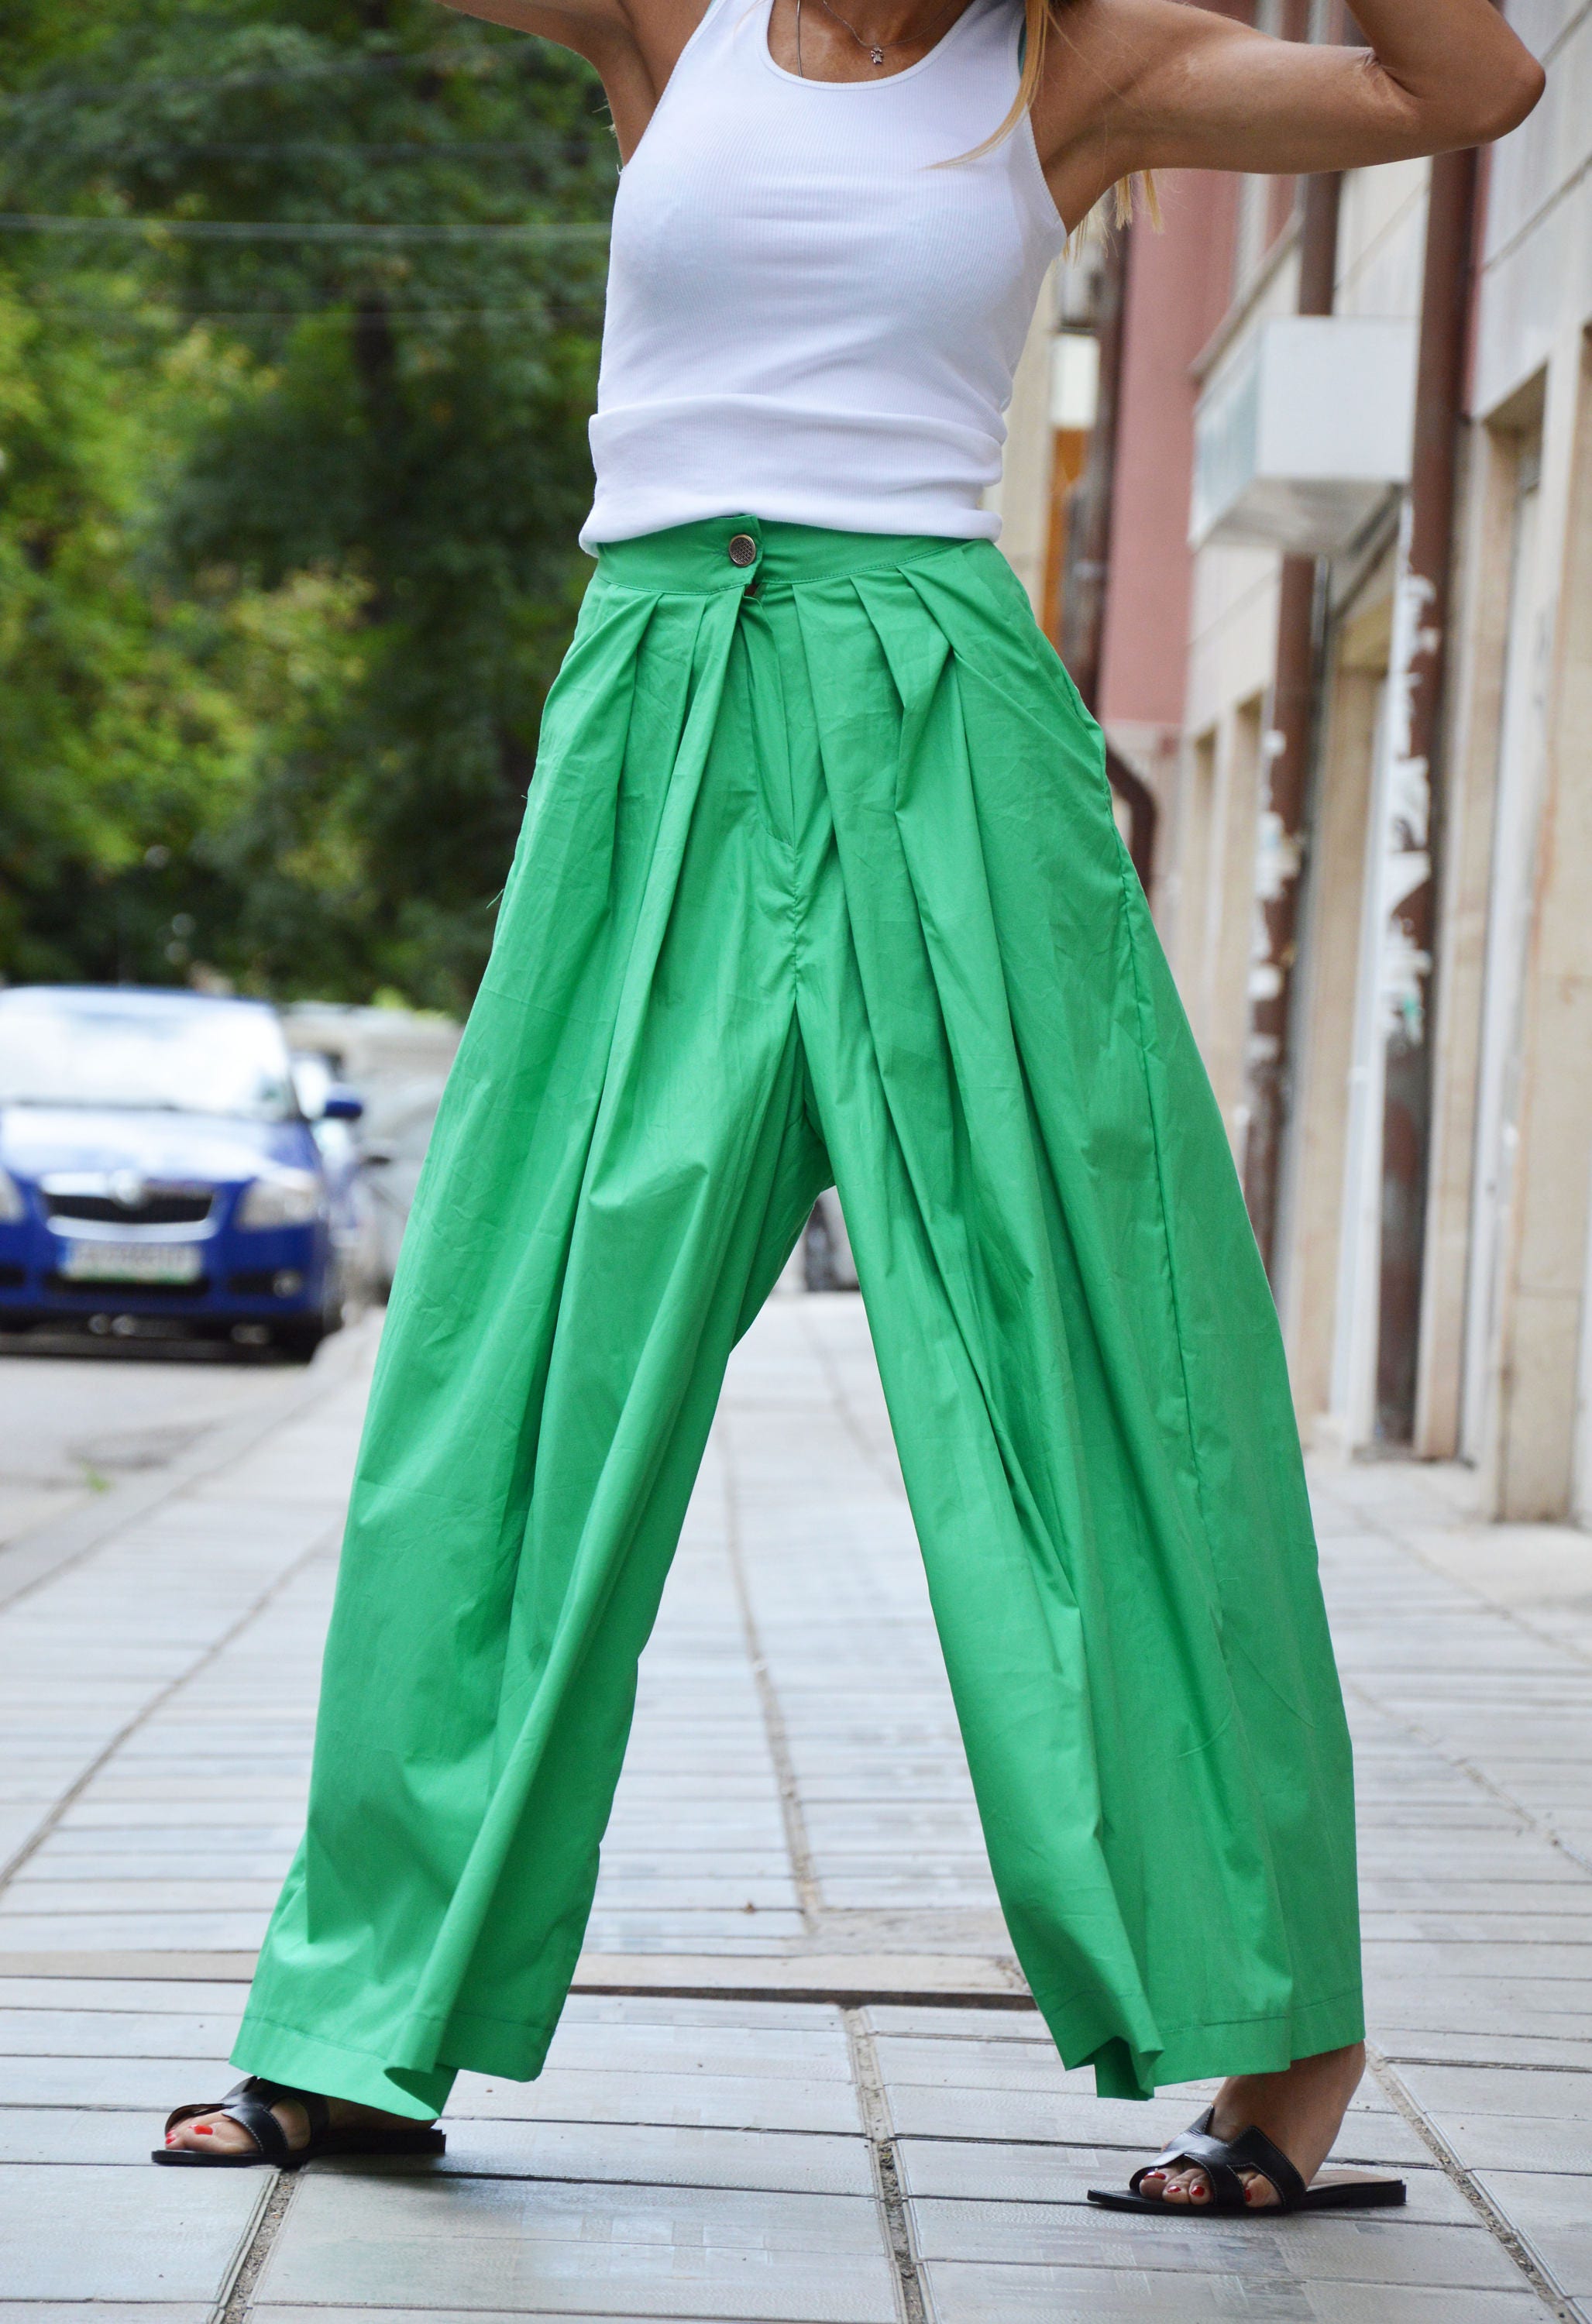 Green Skirt Like Pants Woman Harem Pants High Fashion Pants | Etsy